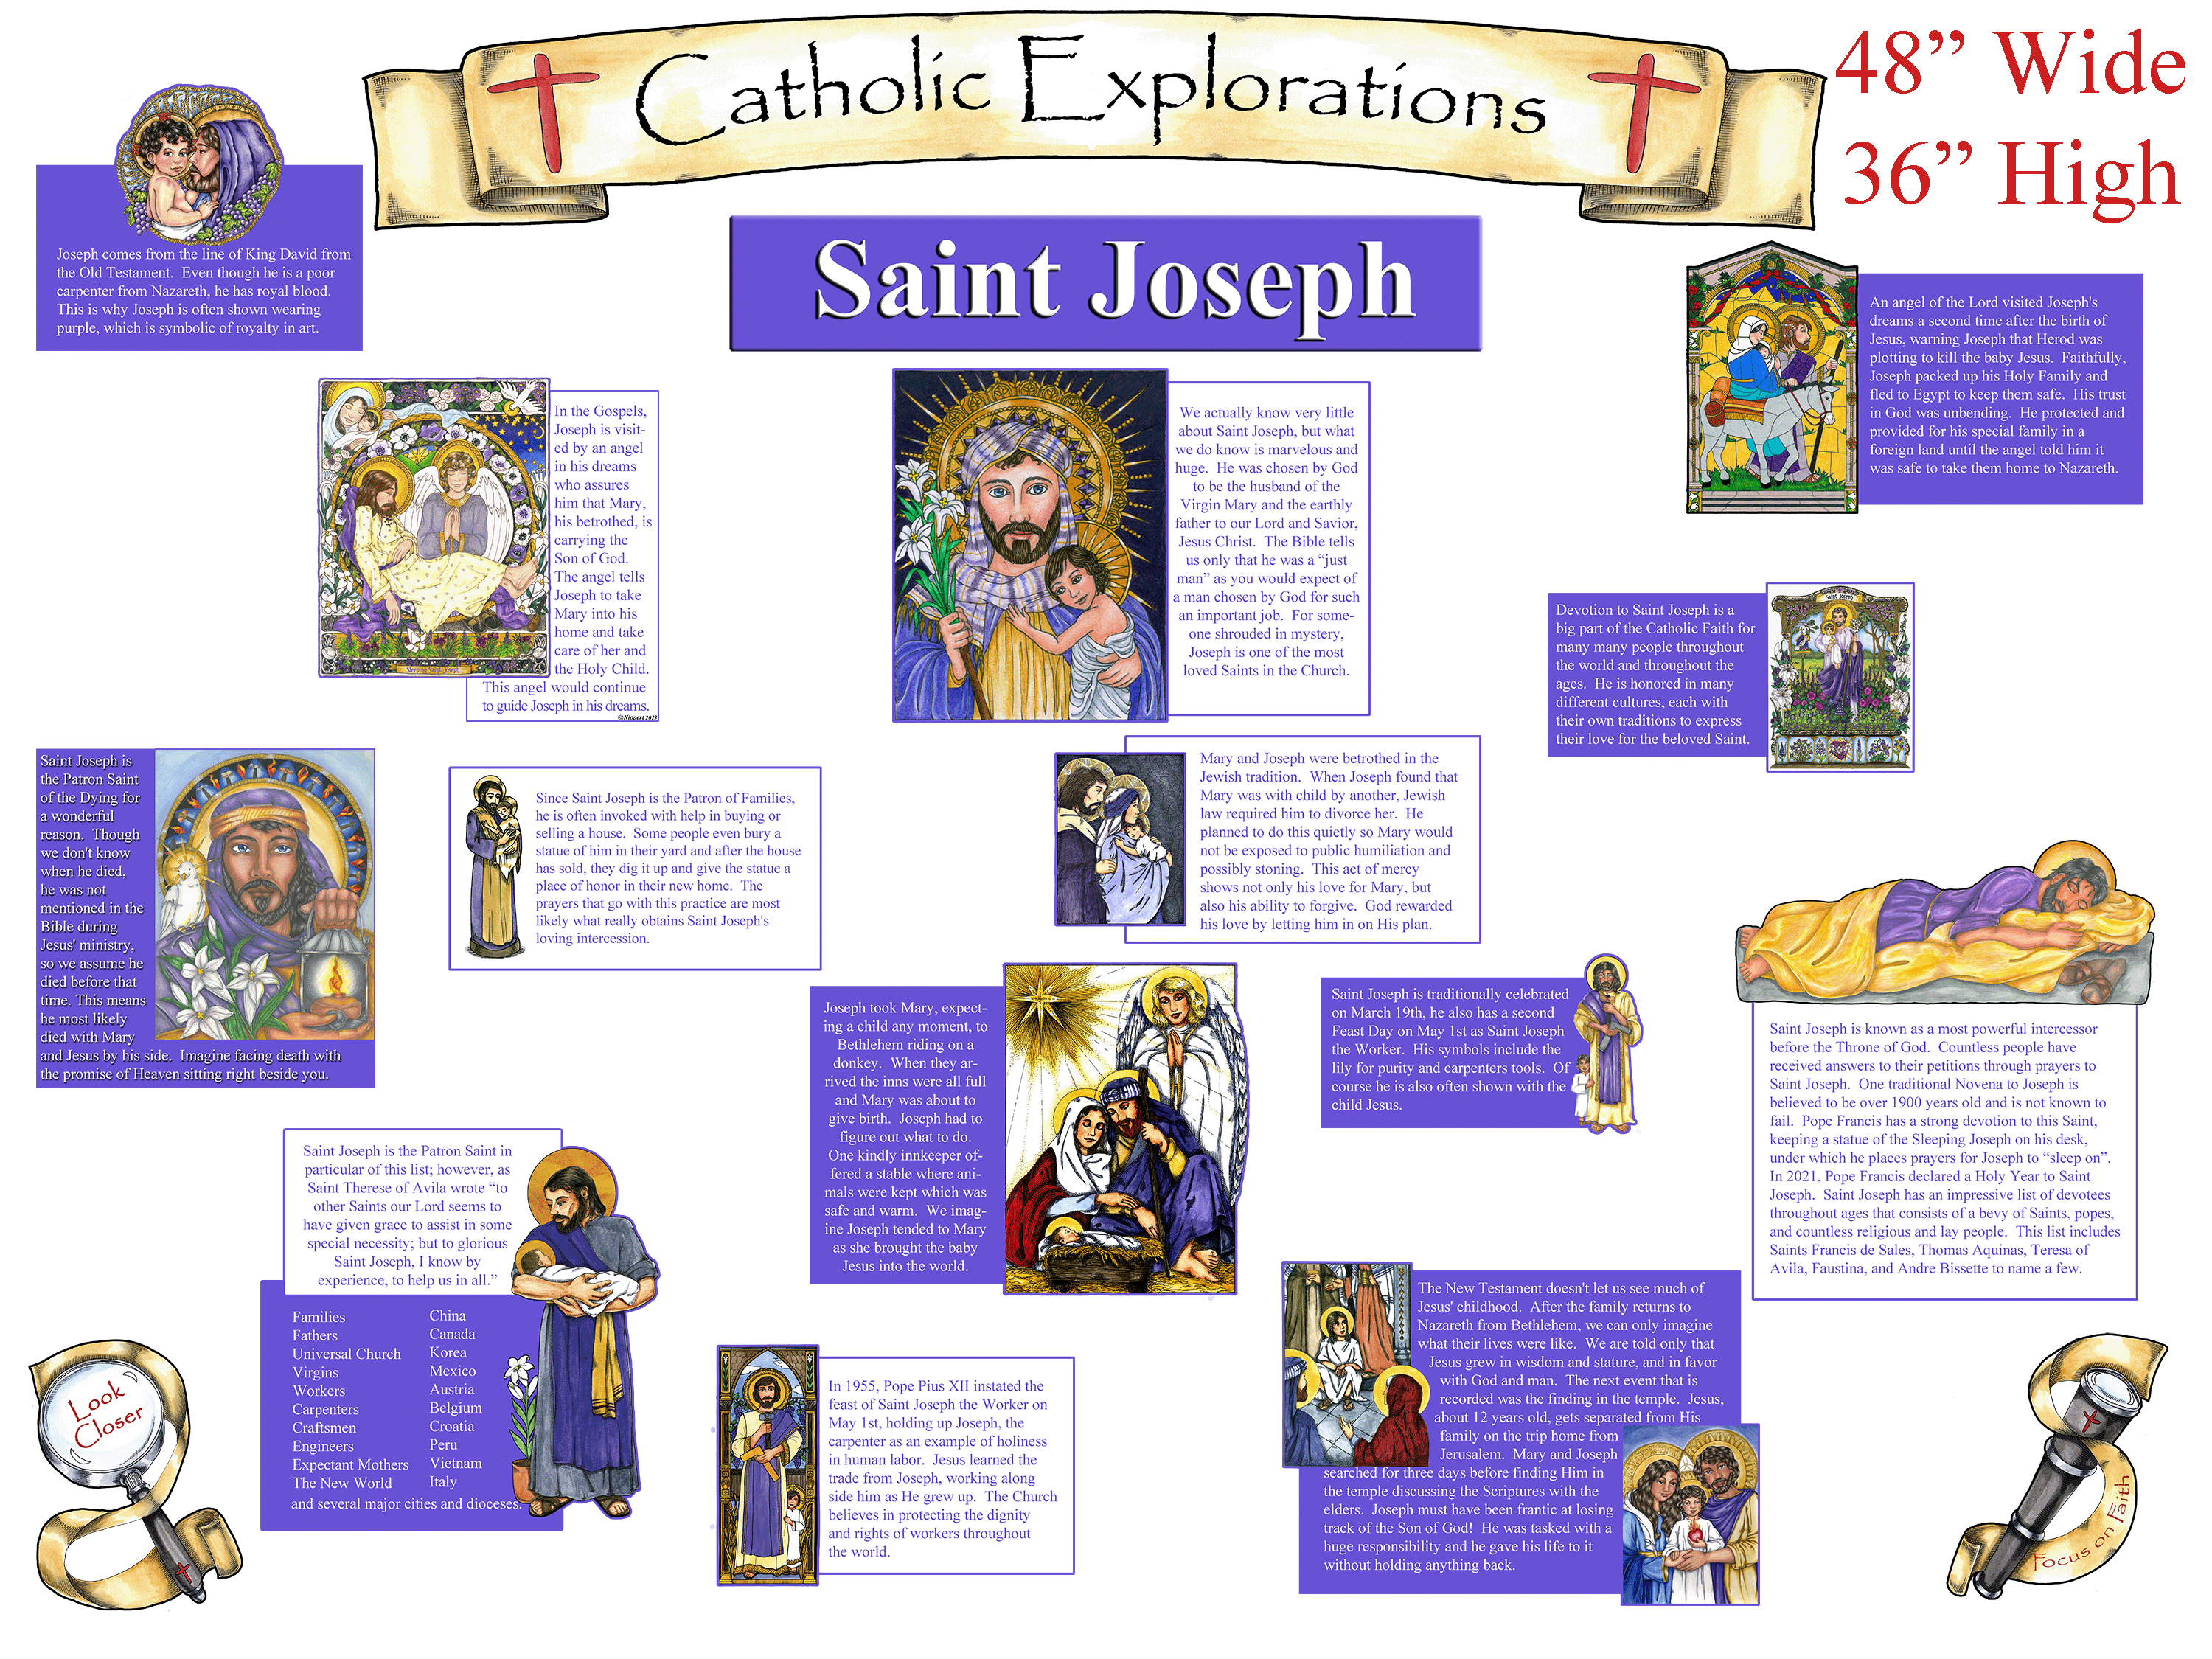 Sleeping Saint Joseph